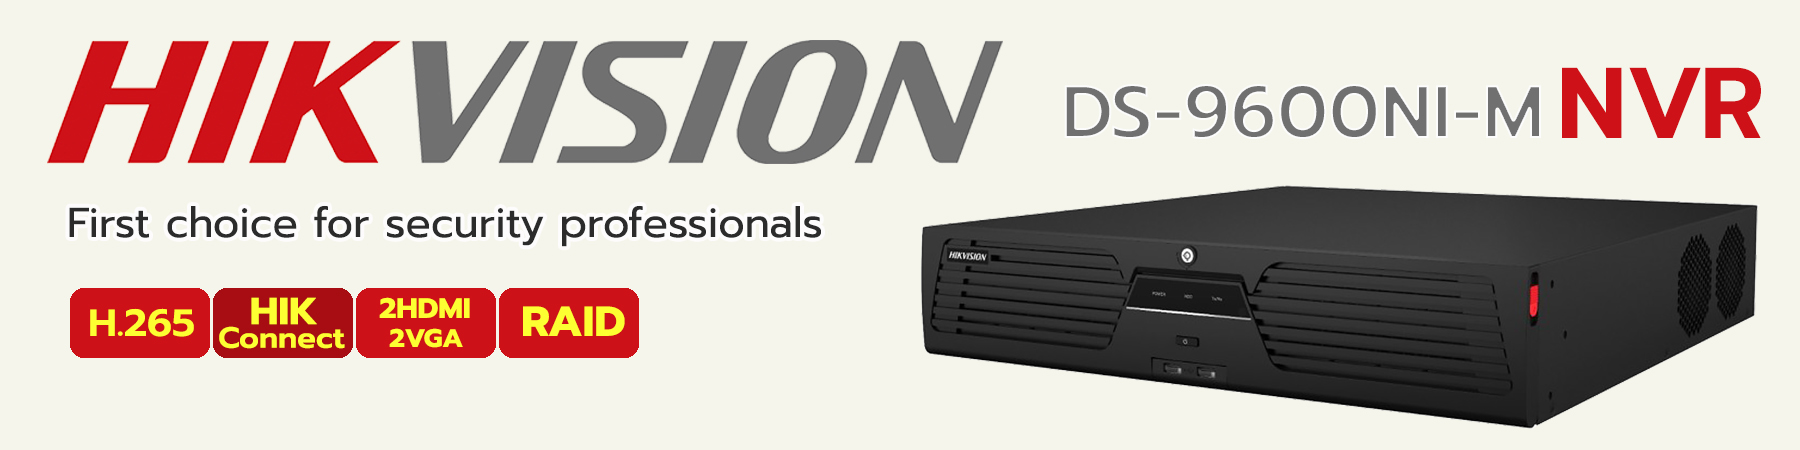 Hikvision NVR, Hikvision Network Video Recorder, เครื่องบันทึก Hikvision NVR, DS-9632NI-M8, DS-9632NI-M16, DS-9664NI-M8, DS-9664NI-M16